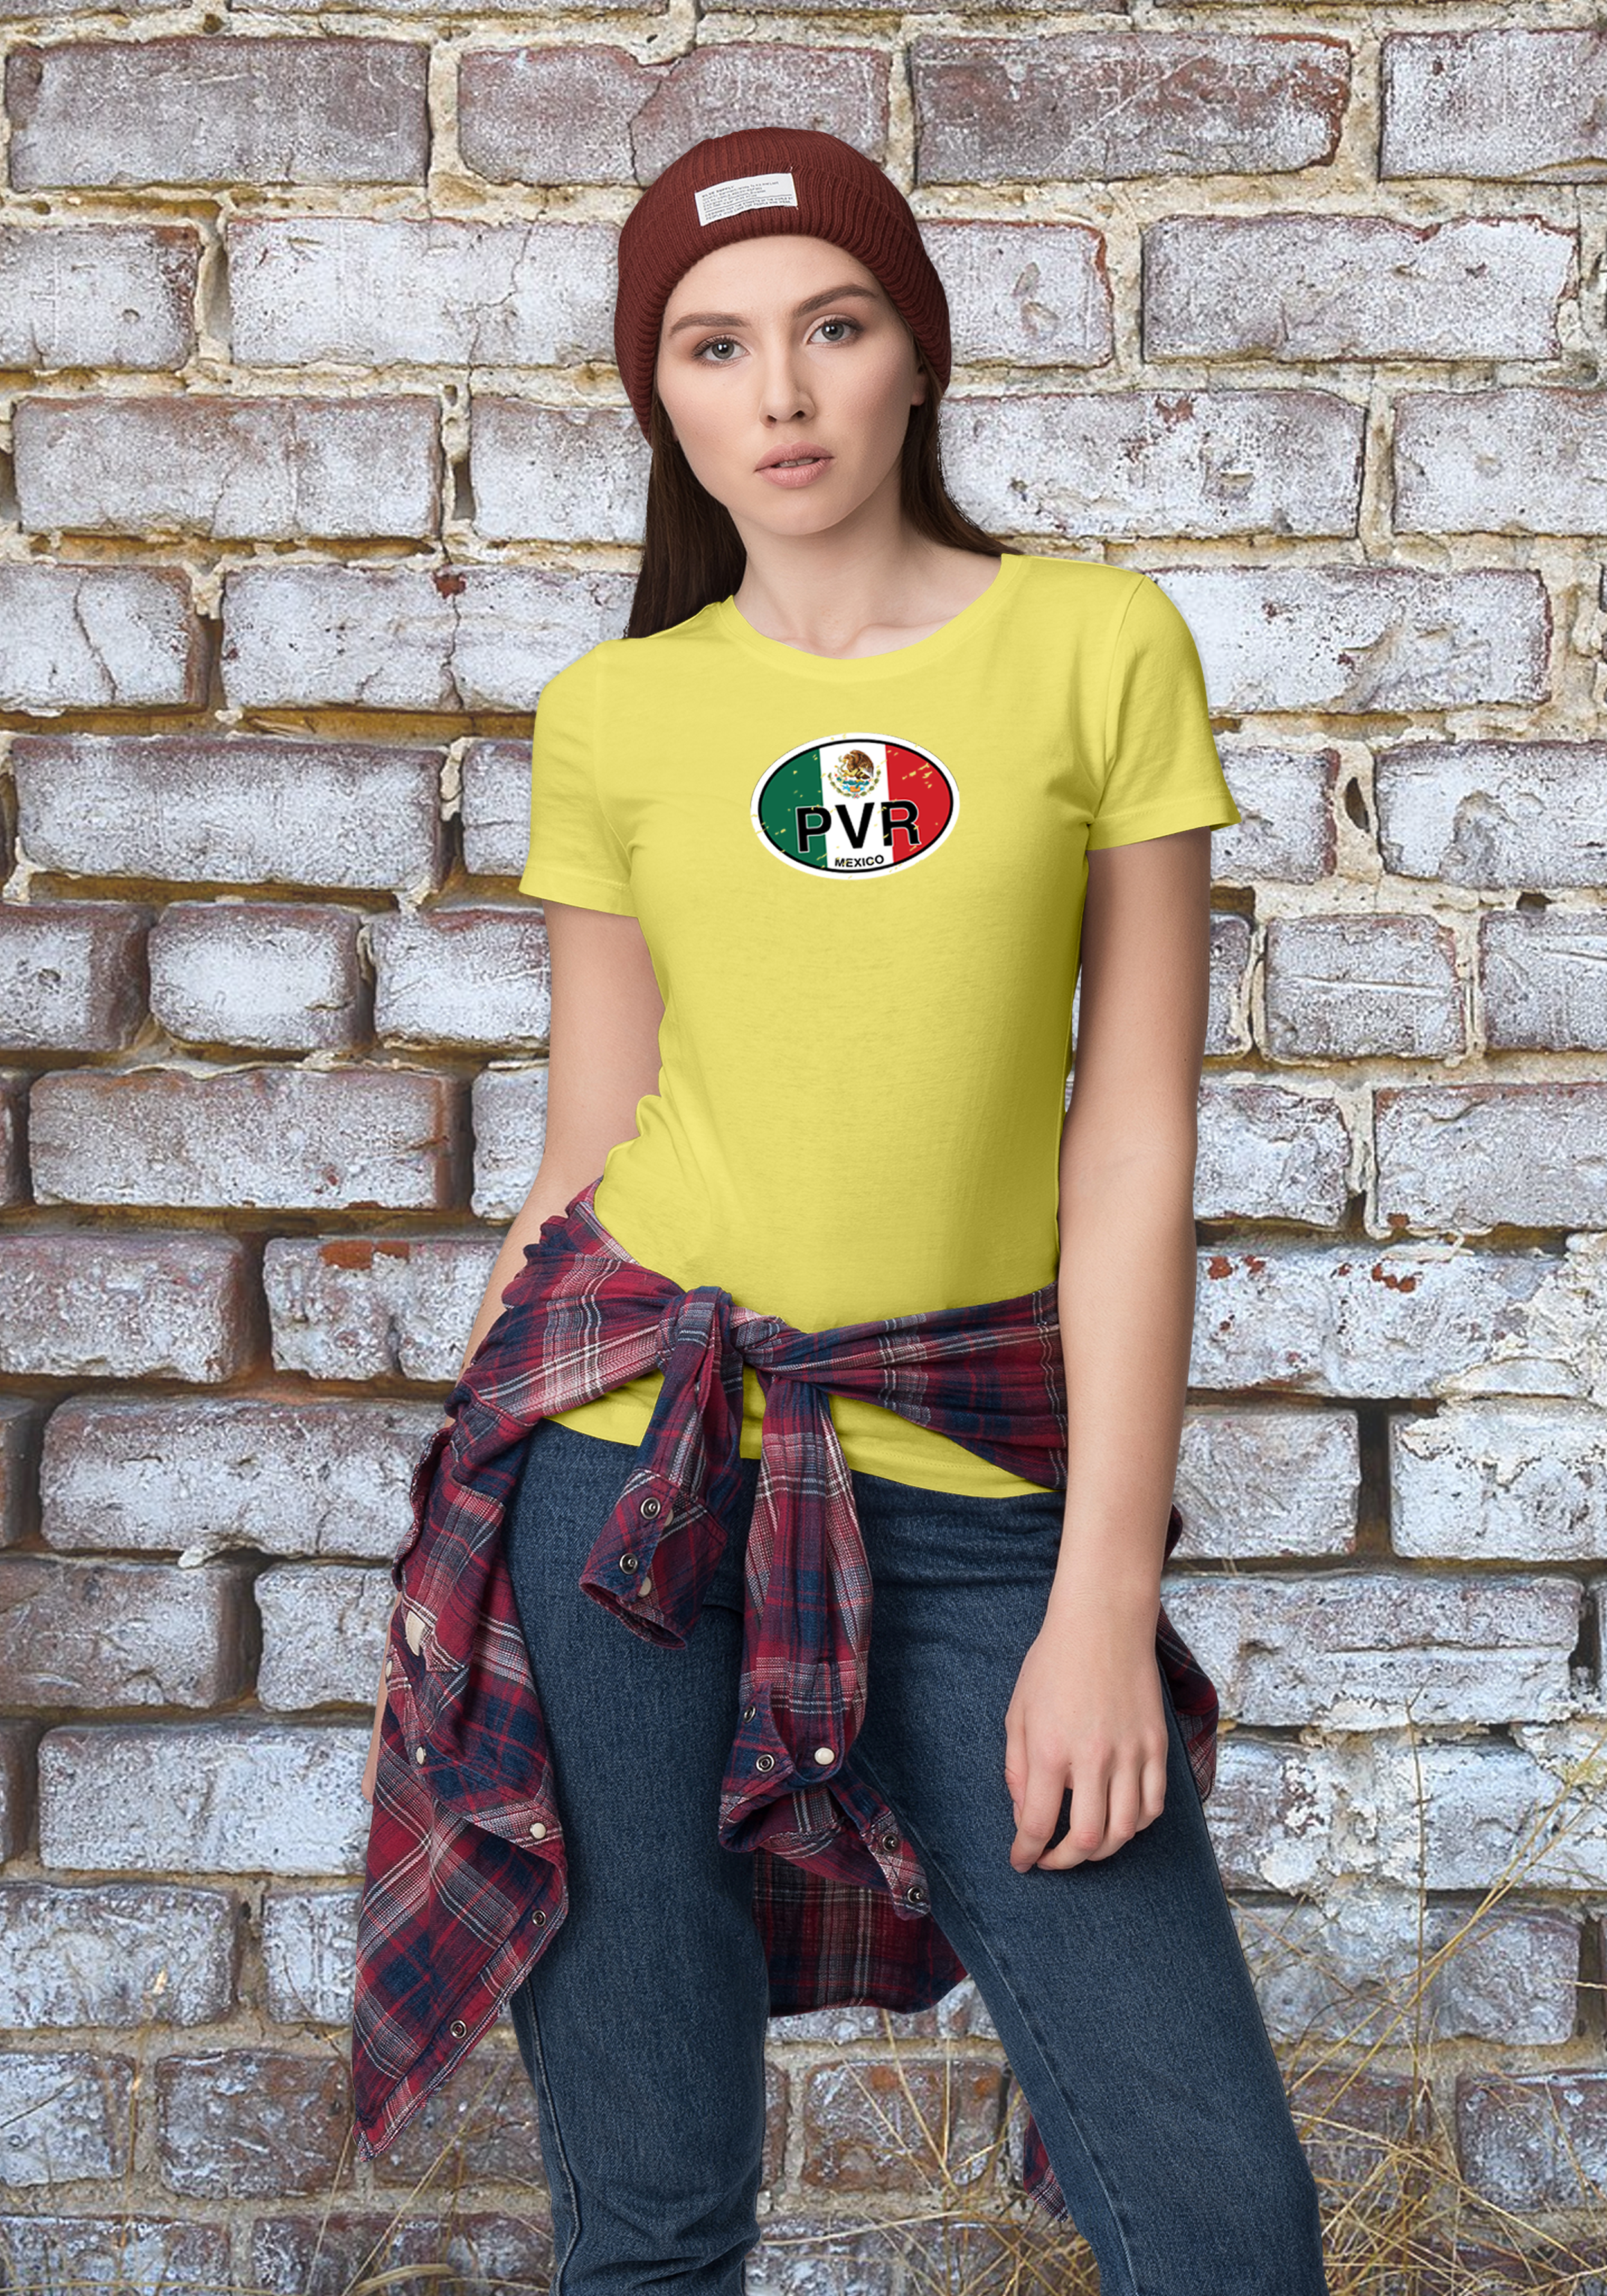 Puerto Vallarta Women's Flag T-Shirt Souvenirs - My Destination Location